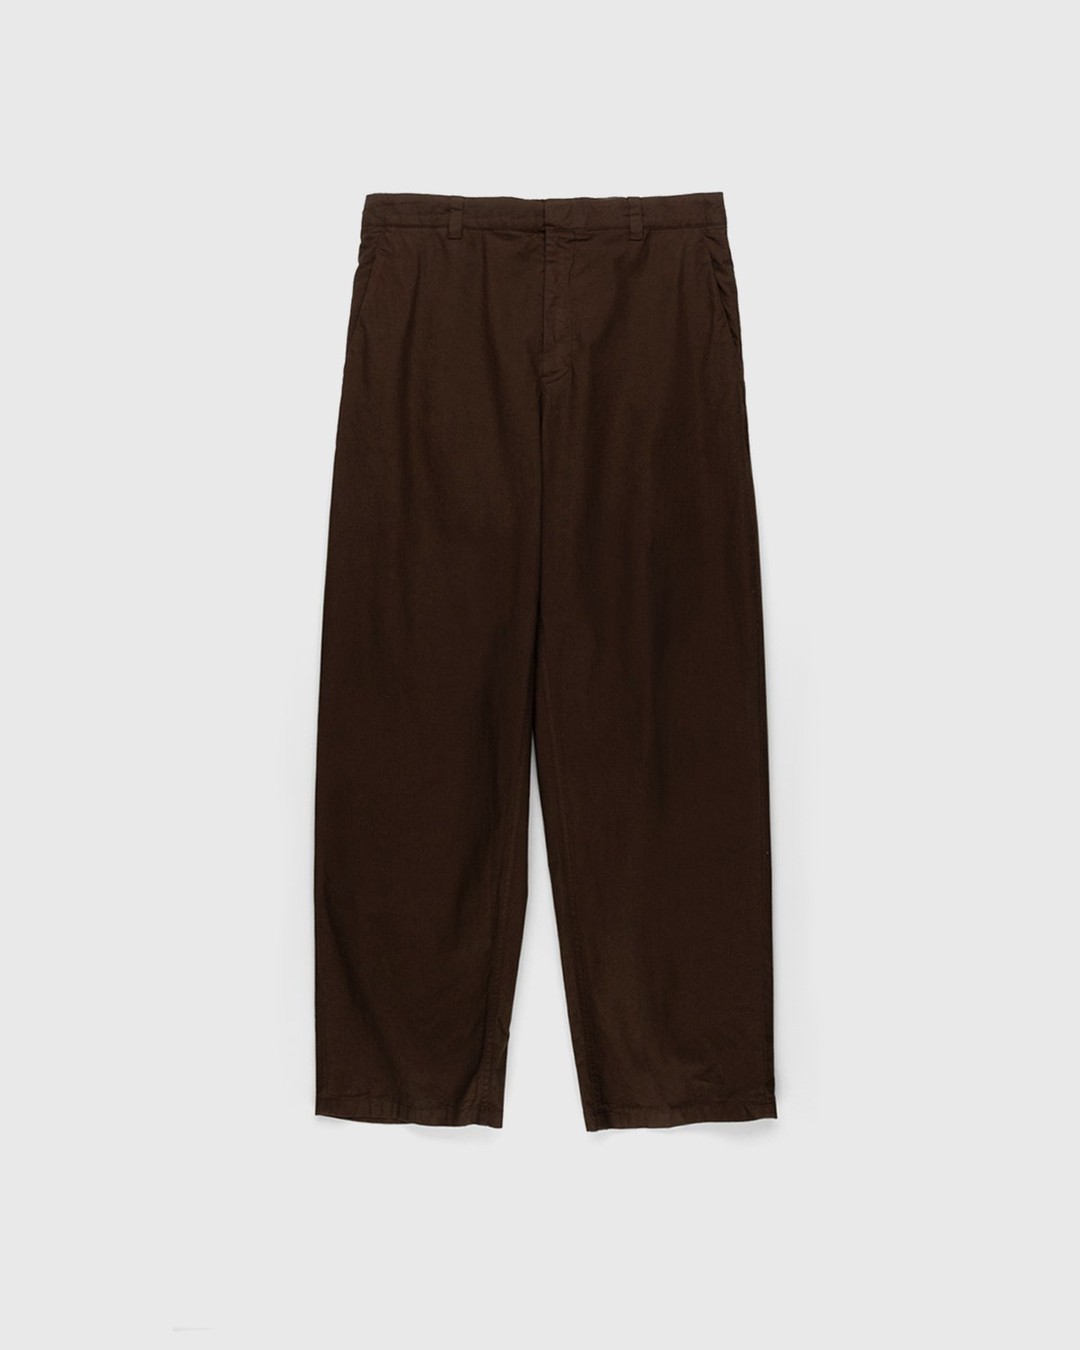 Jil Sander – Cotton Trousers Dark Brown - Trousers - Brown - Image 2